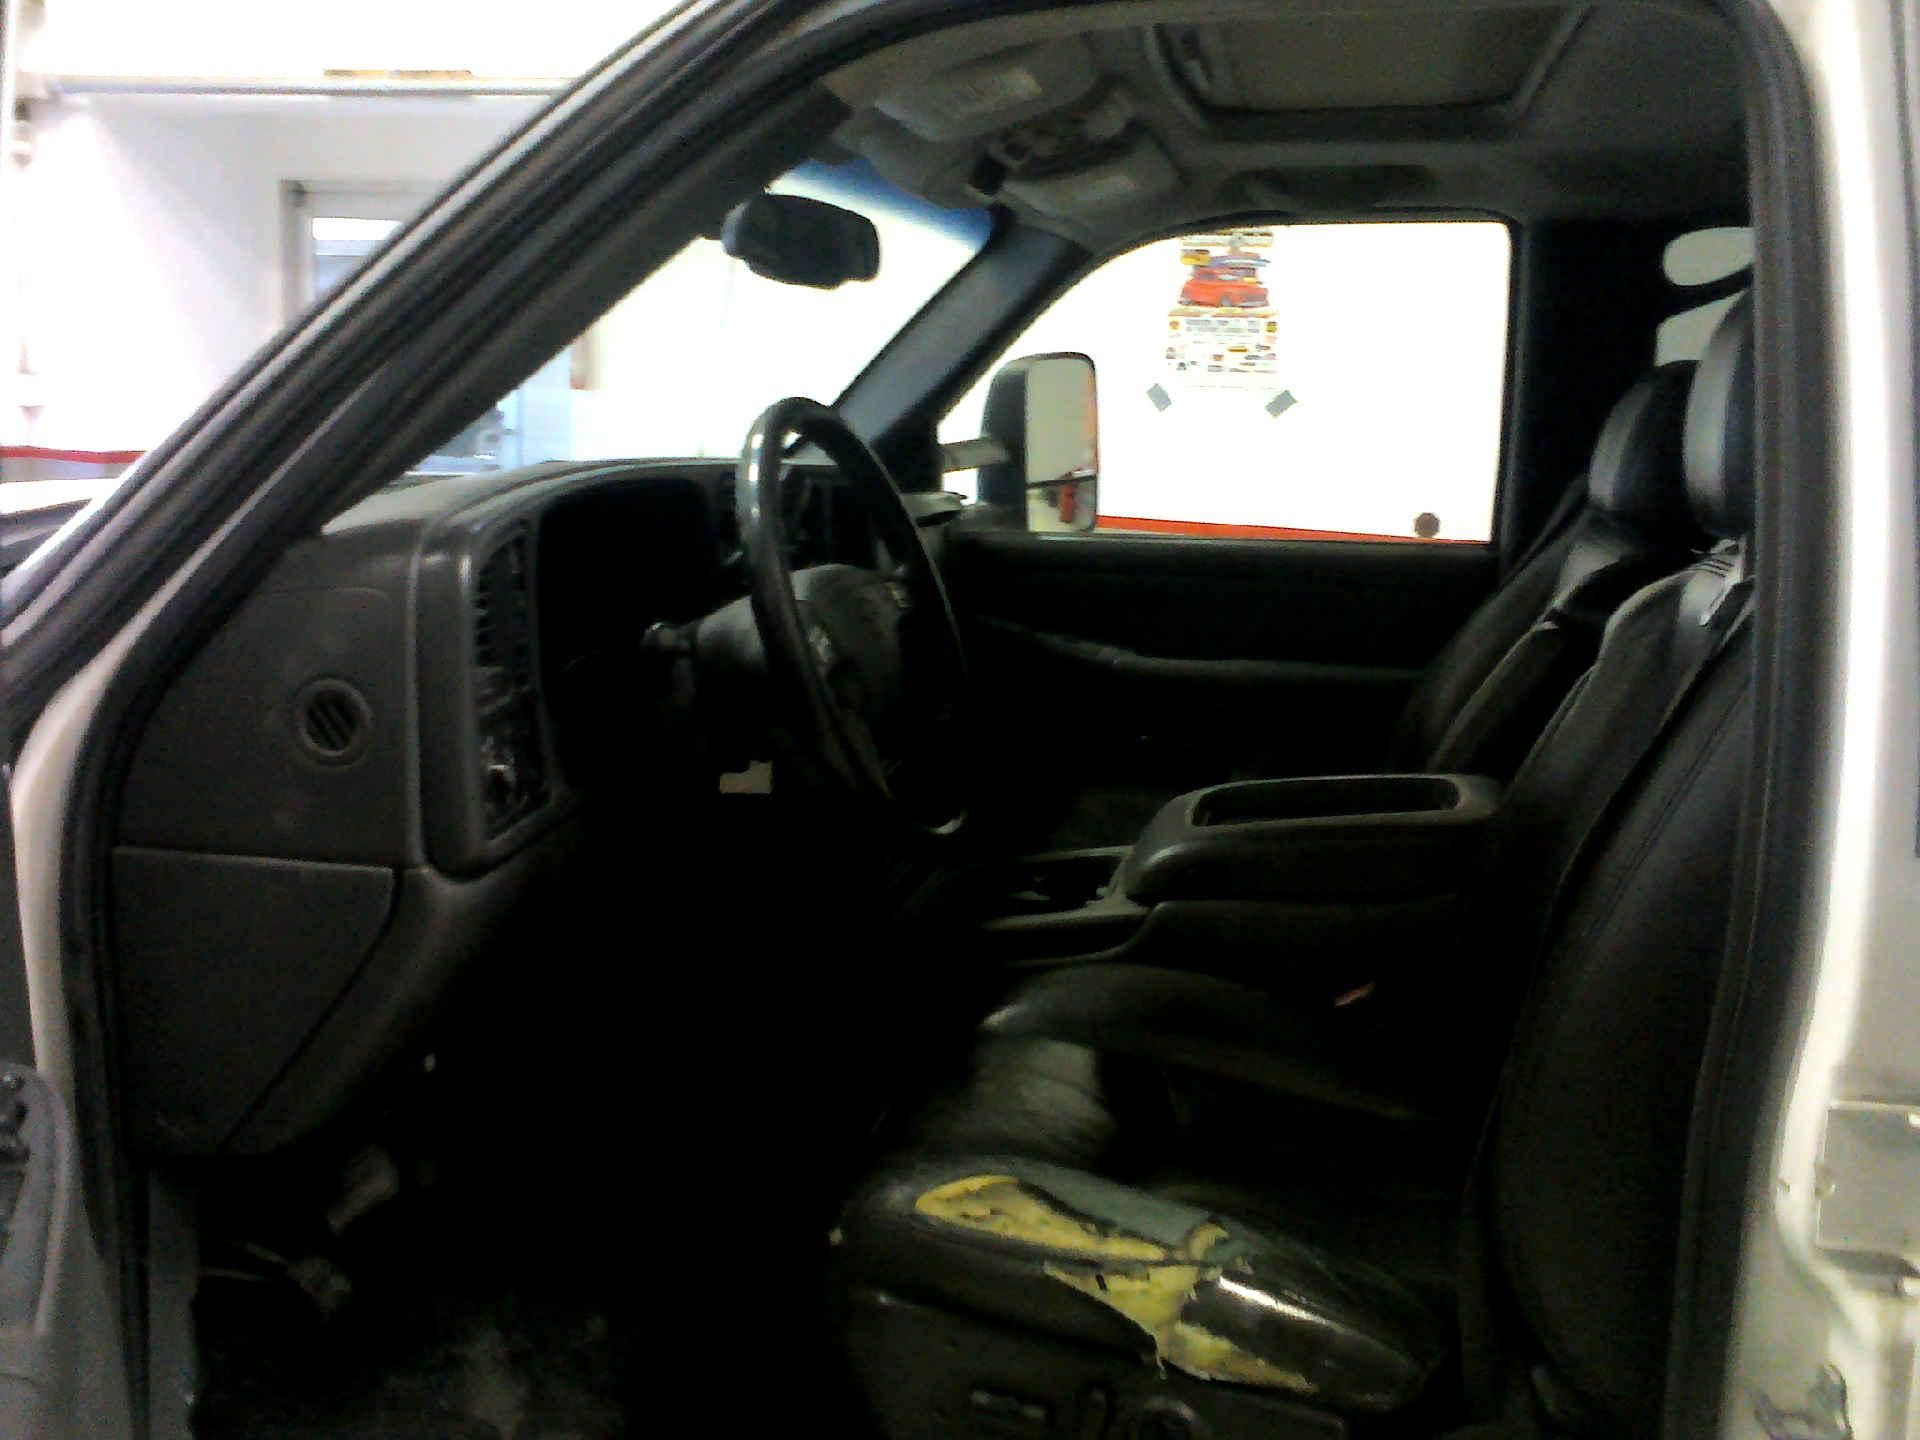 2006 CHEVROLET SILVERADO 2500HD LT CREW CAB 4WD 6.6L V8 OHV 32V TURBO DIESEL AUTOMATIC SN: - Image 5 of 9